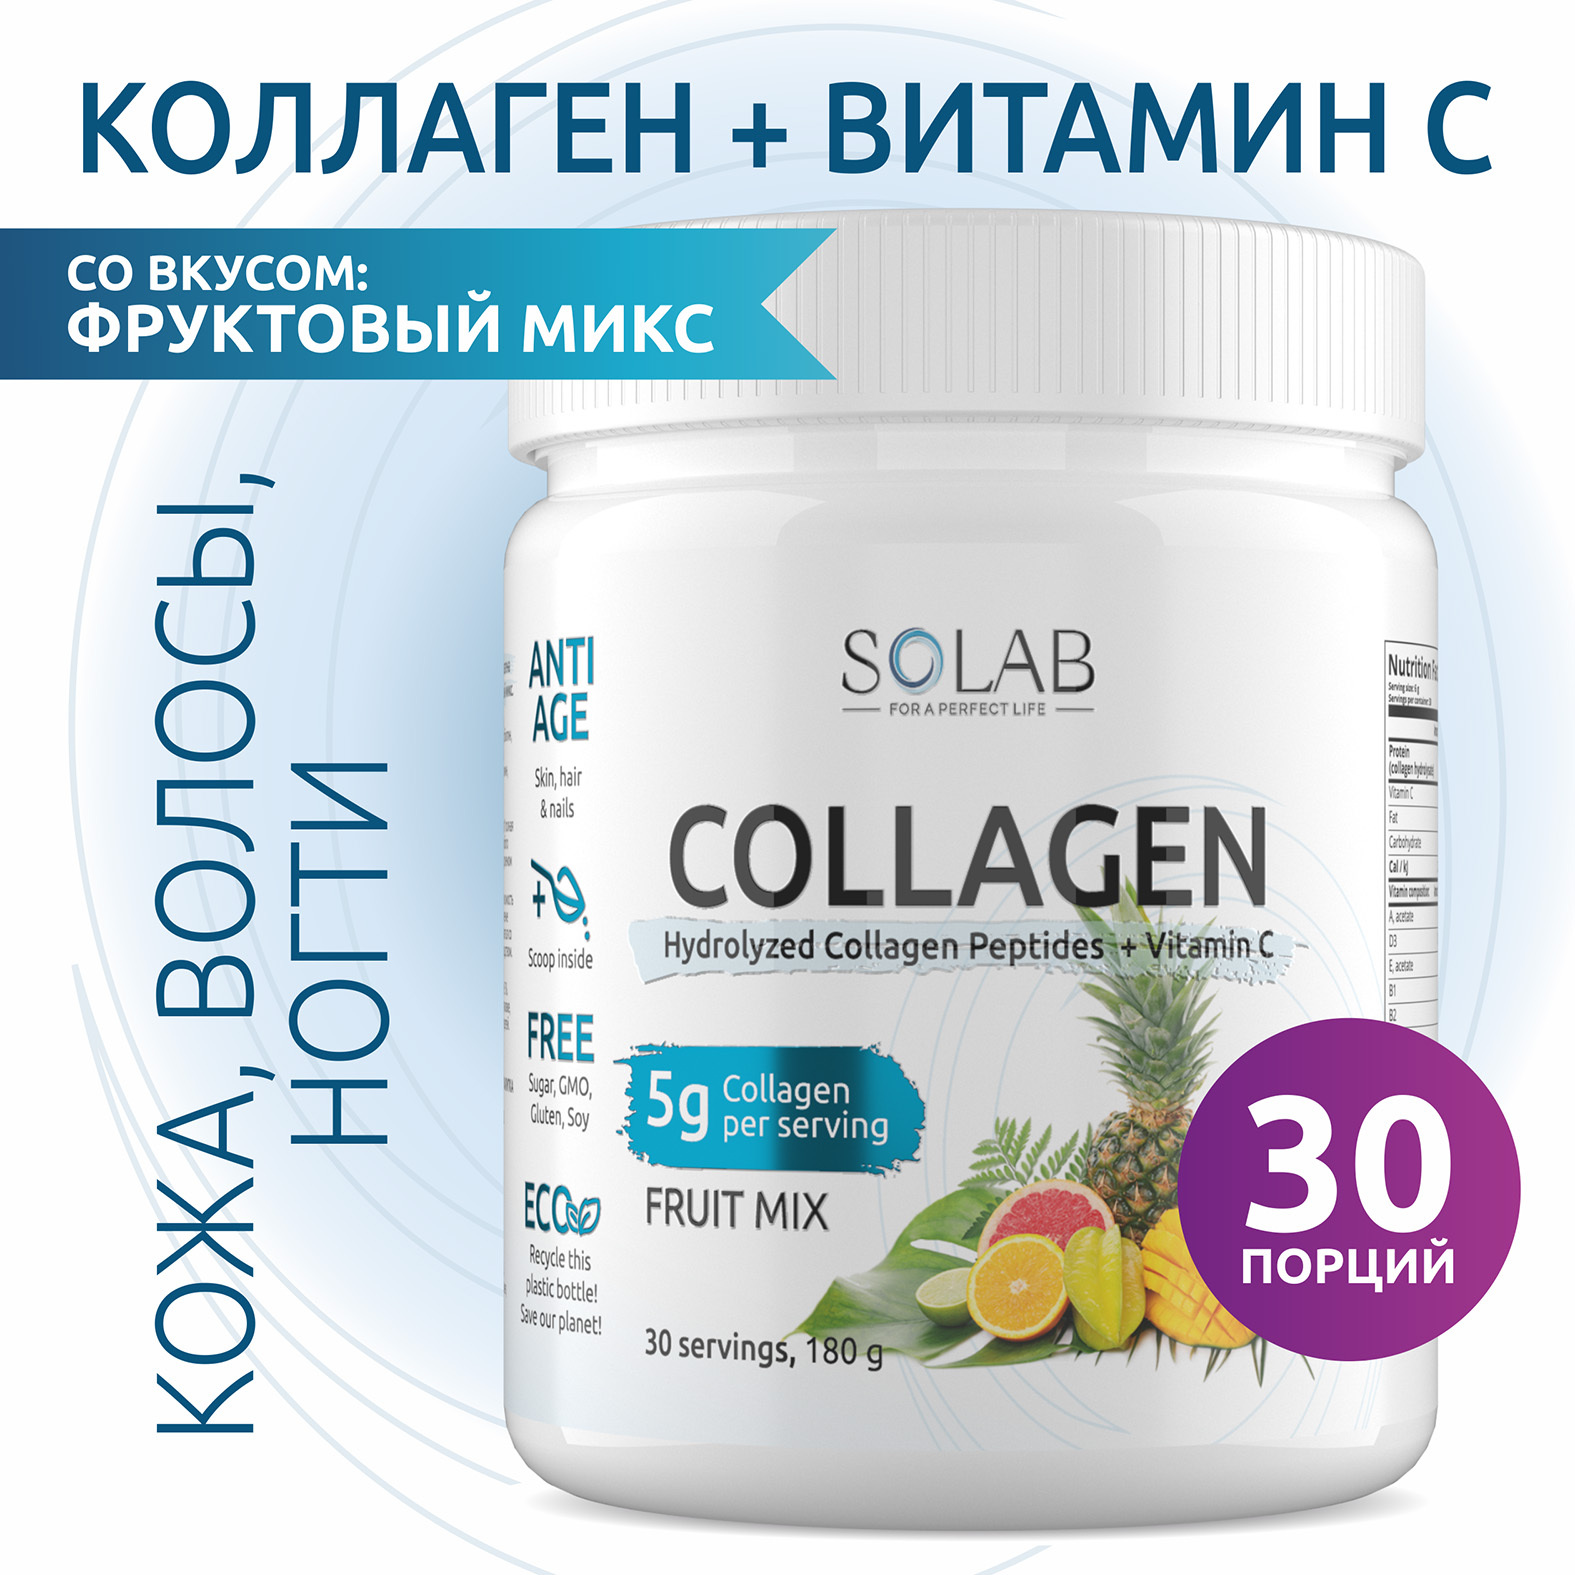 Коллаген рыбный с витамином с. SOLAB коллаген. Коллаген с витамином с. Коллаген с витамином с порошок. Hyaluronic acid Collagen Complex.